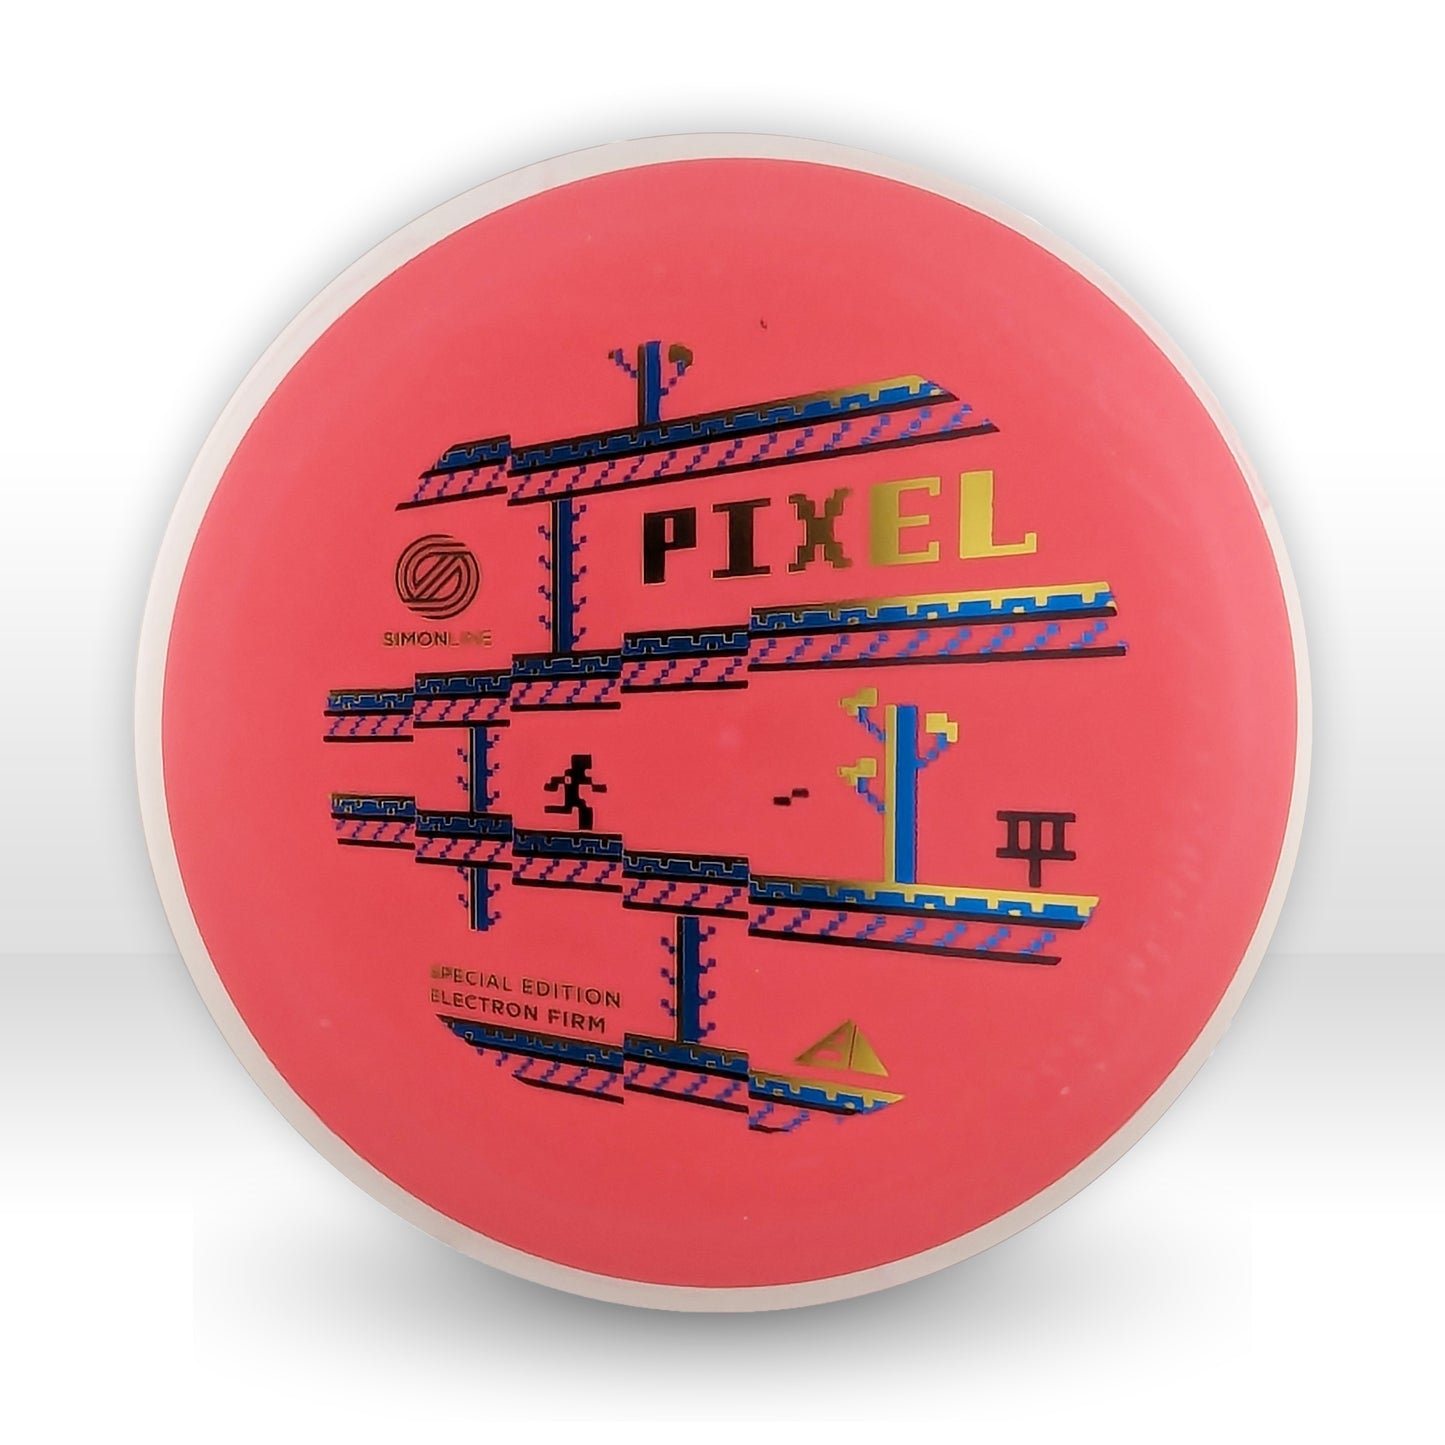 Axiom Simon Line Special Edition Electron FIRM Pixel